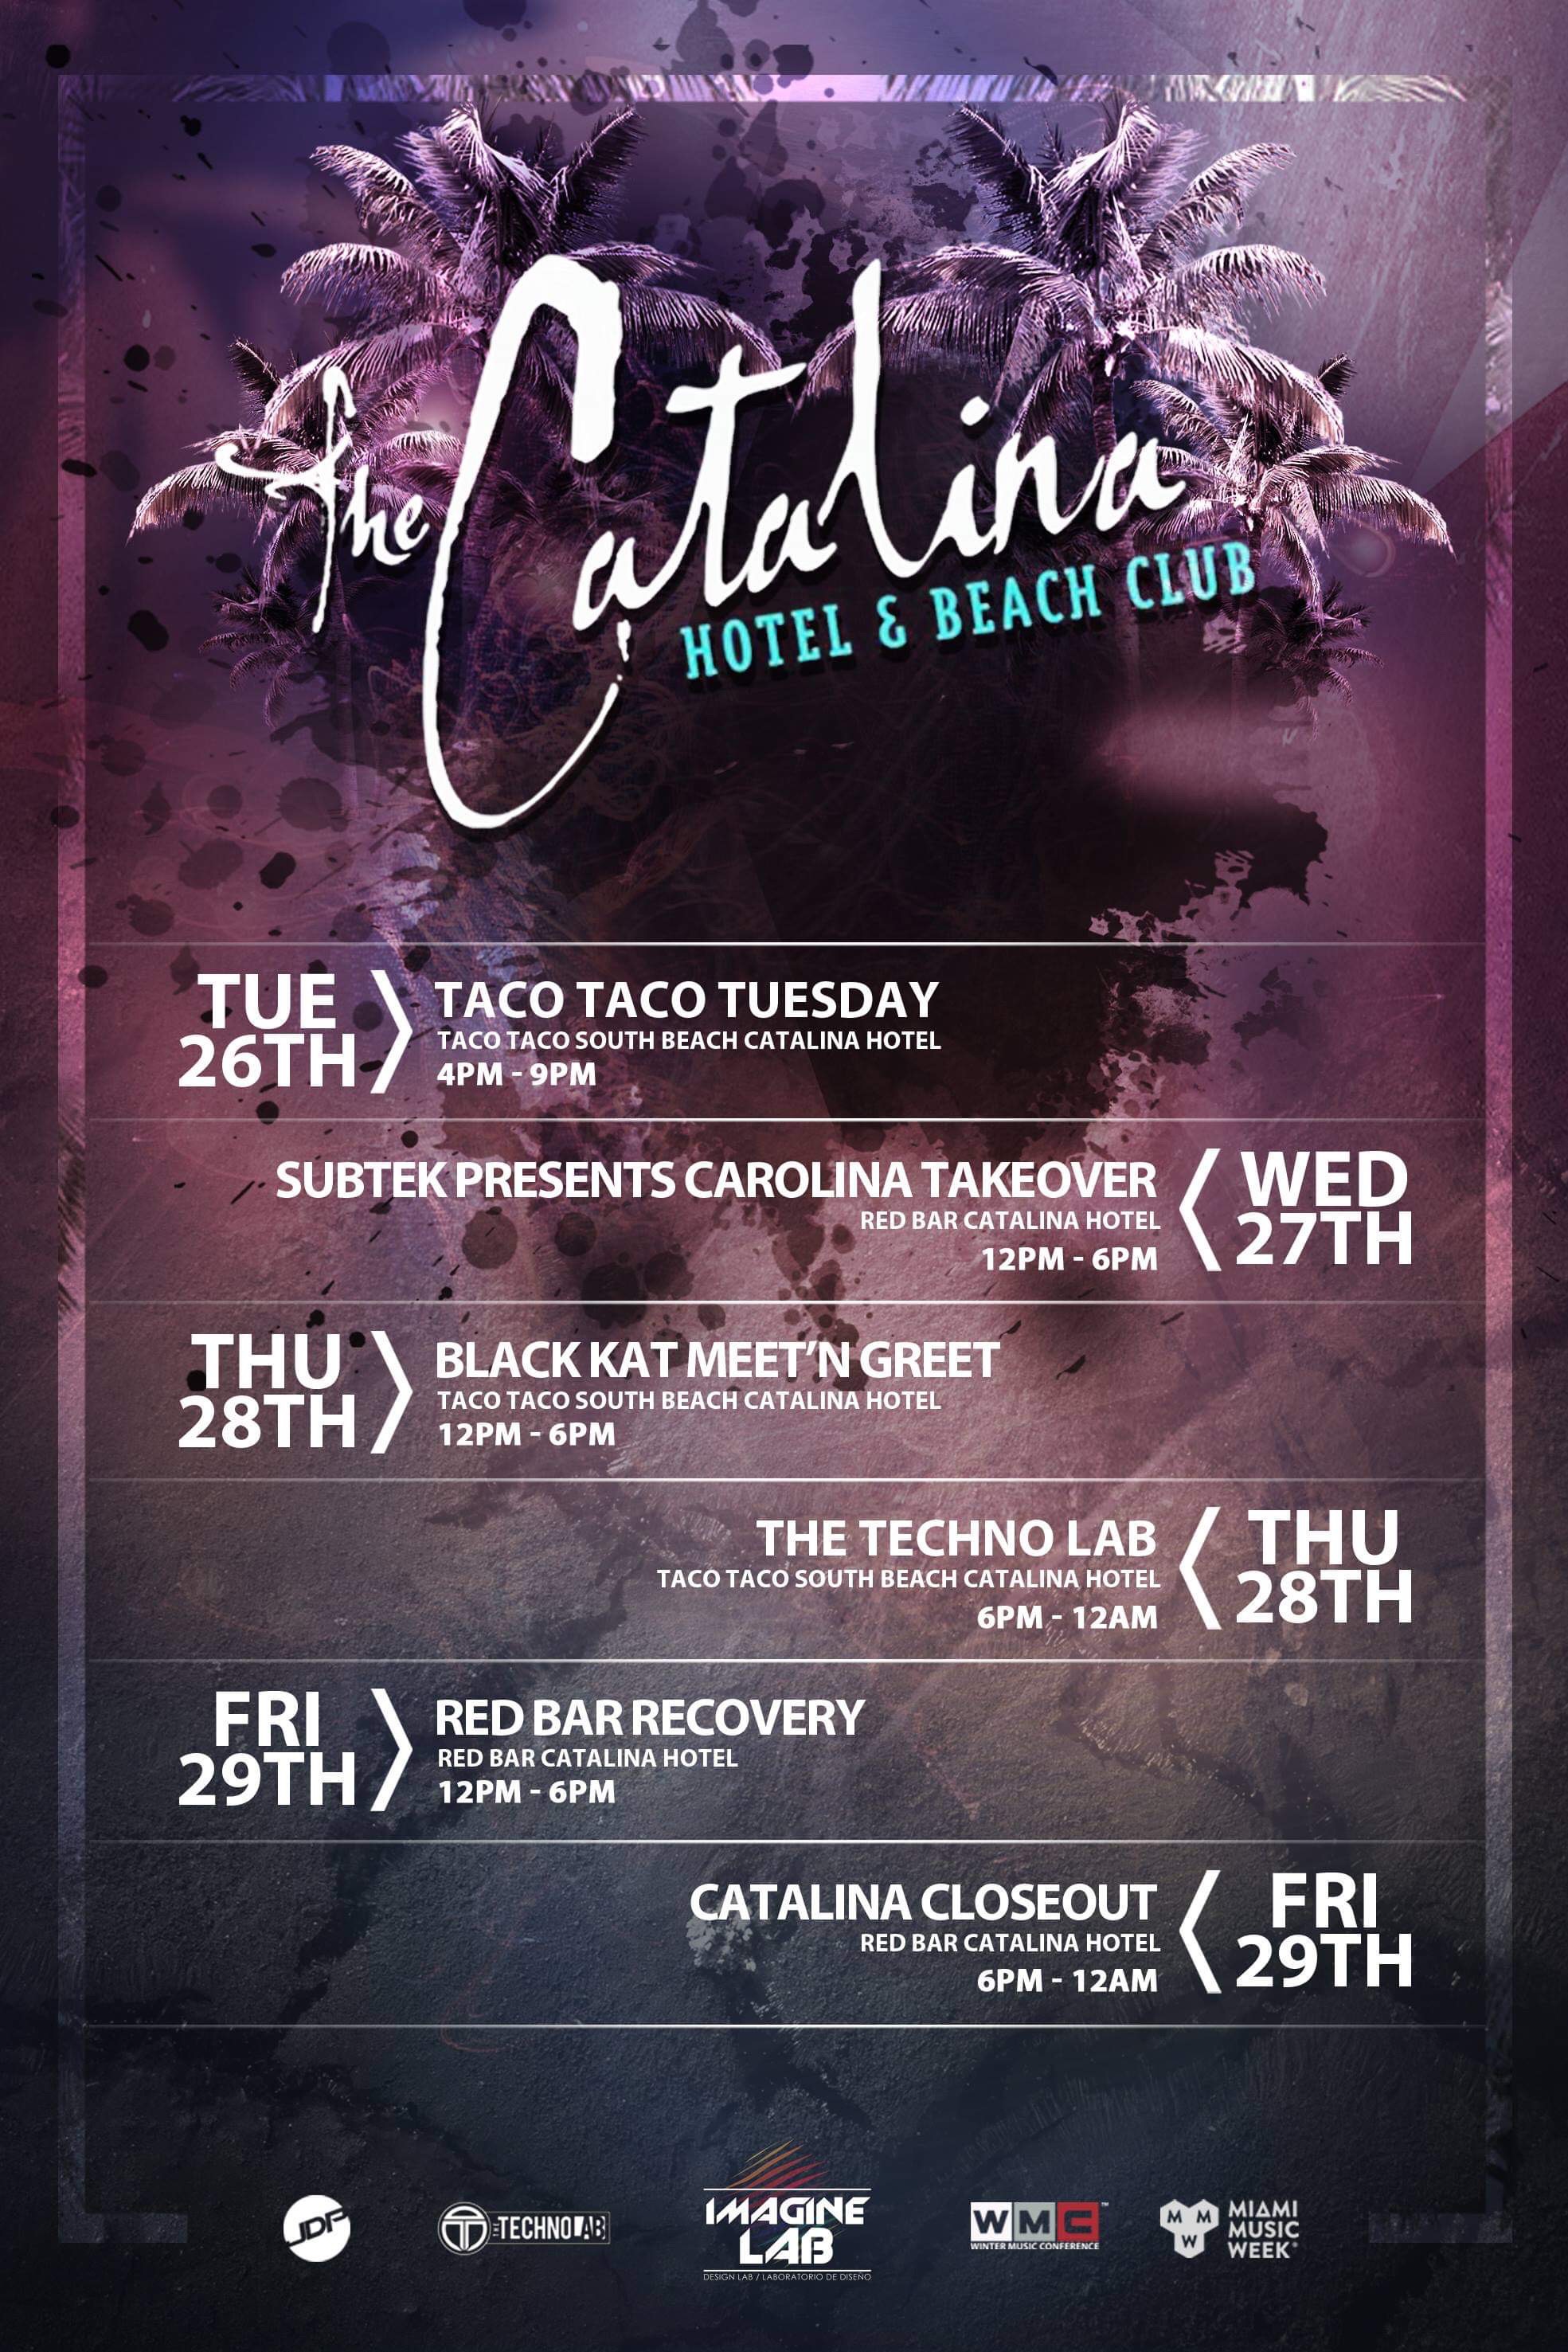 Catalina Hotel & Beach Club Miami Music Week 2019